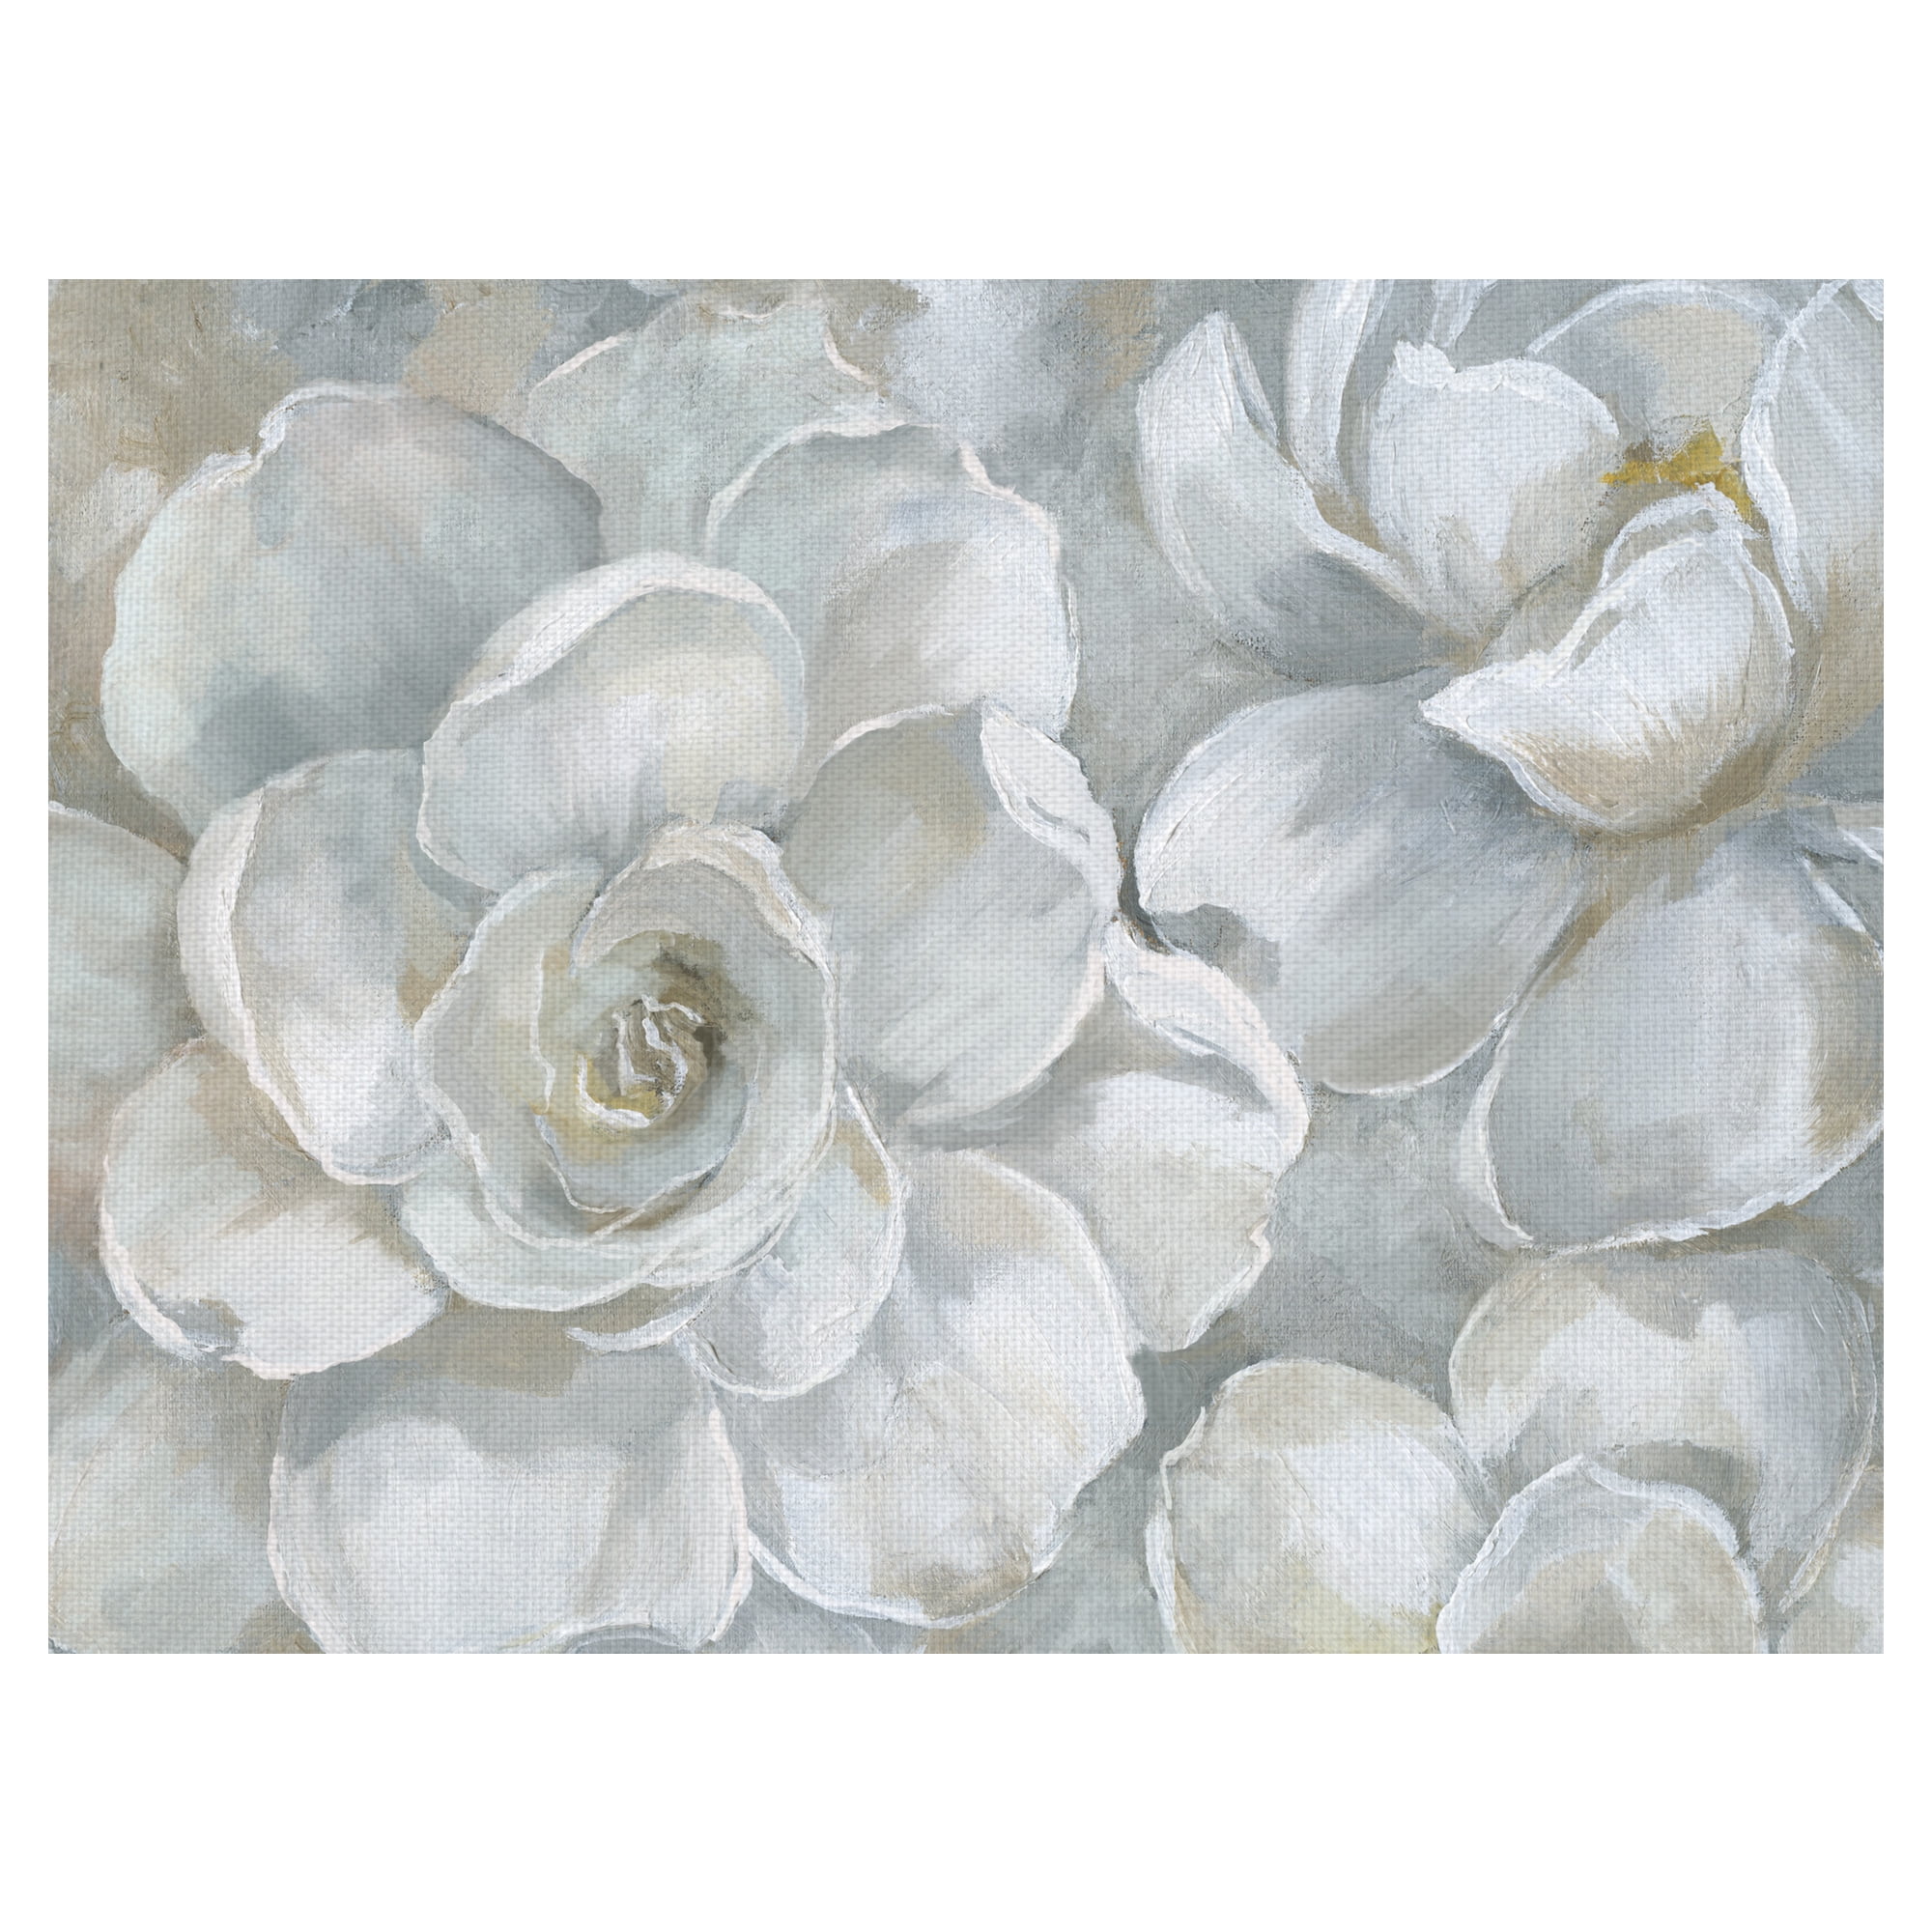 Masterpiece Art Gallery White Gardenia by Nan Canvas Art Print 30